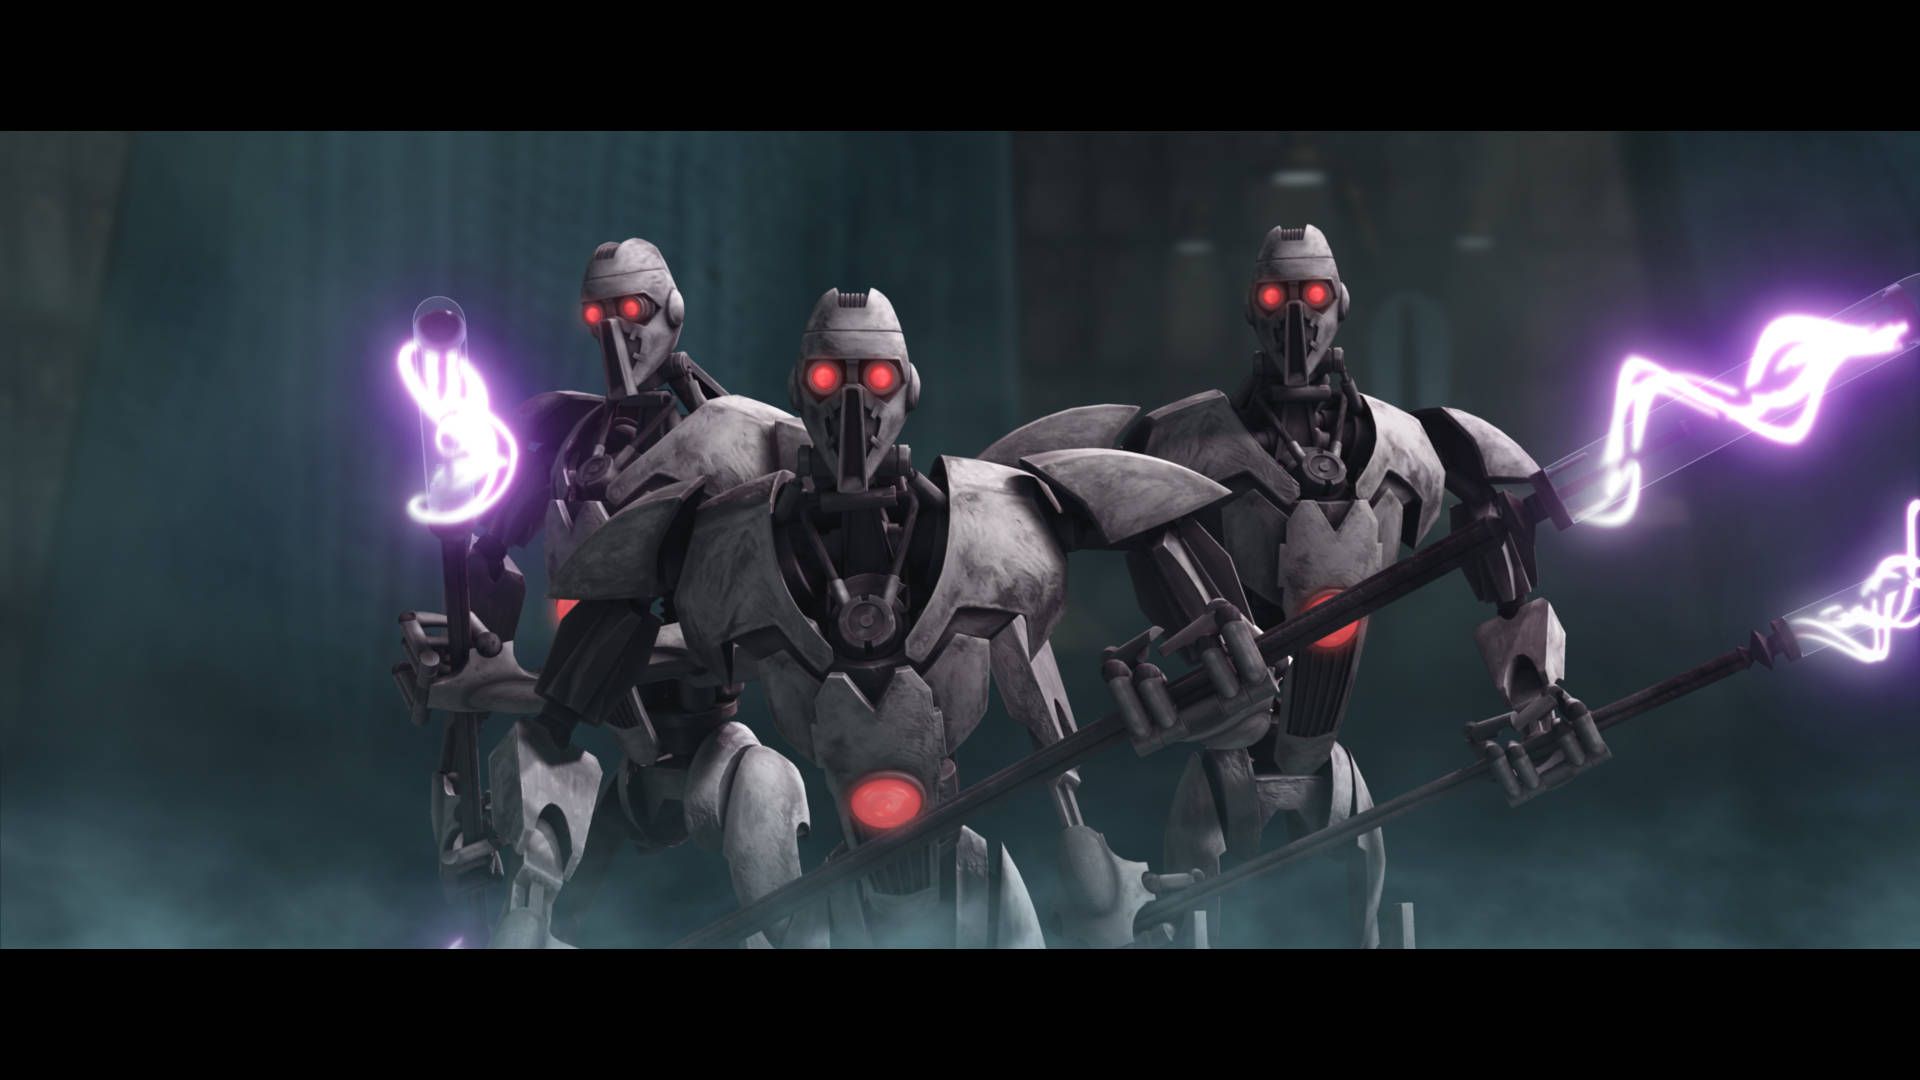 Clone Wars Bodyguard Droids. Star wars image, Star wars empire, Star wars picture